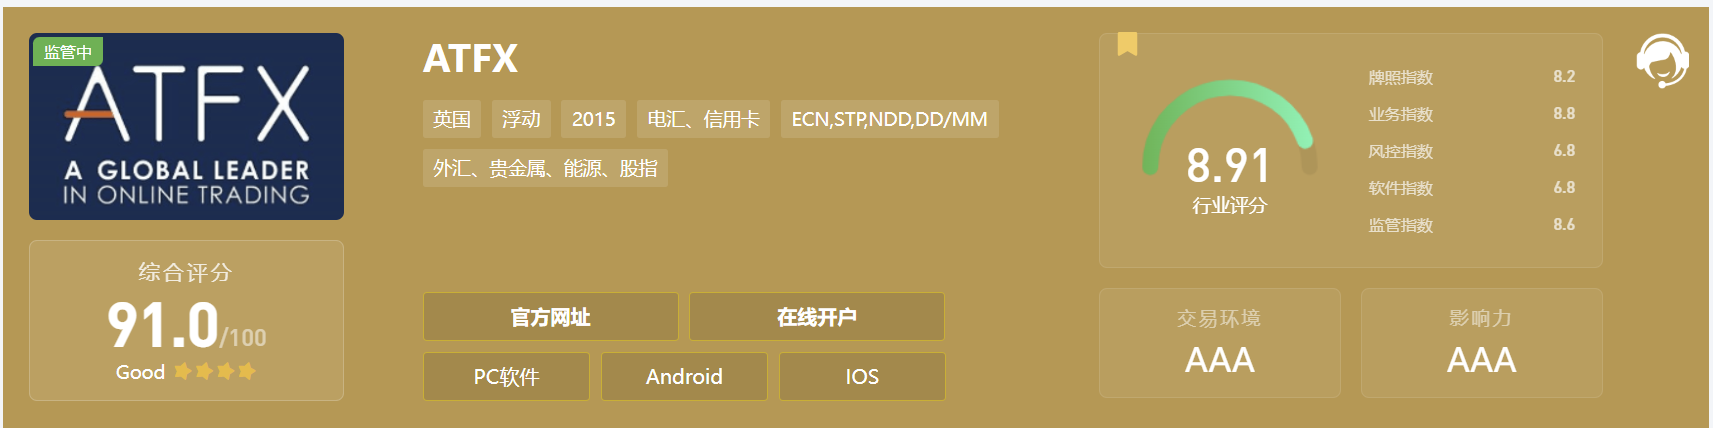 ATFX官方开户推荐(评分:91.0)